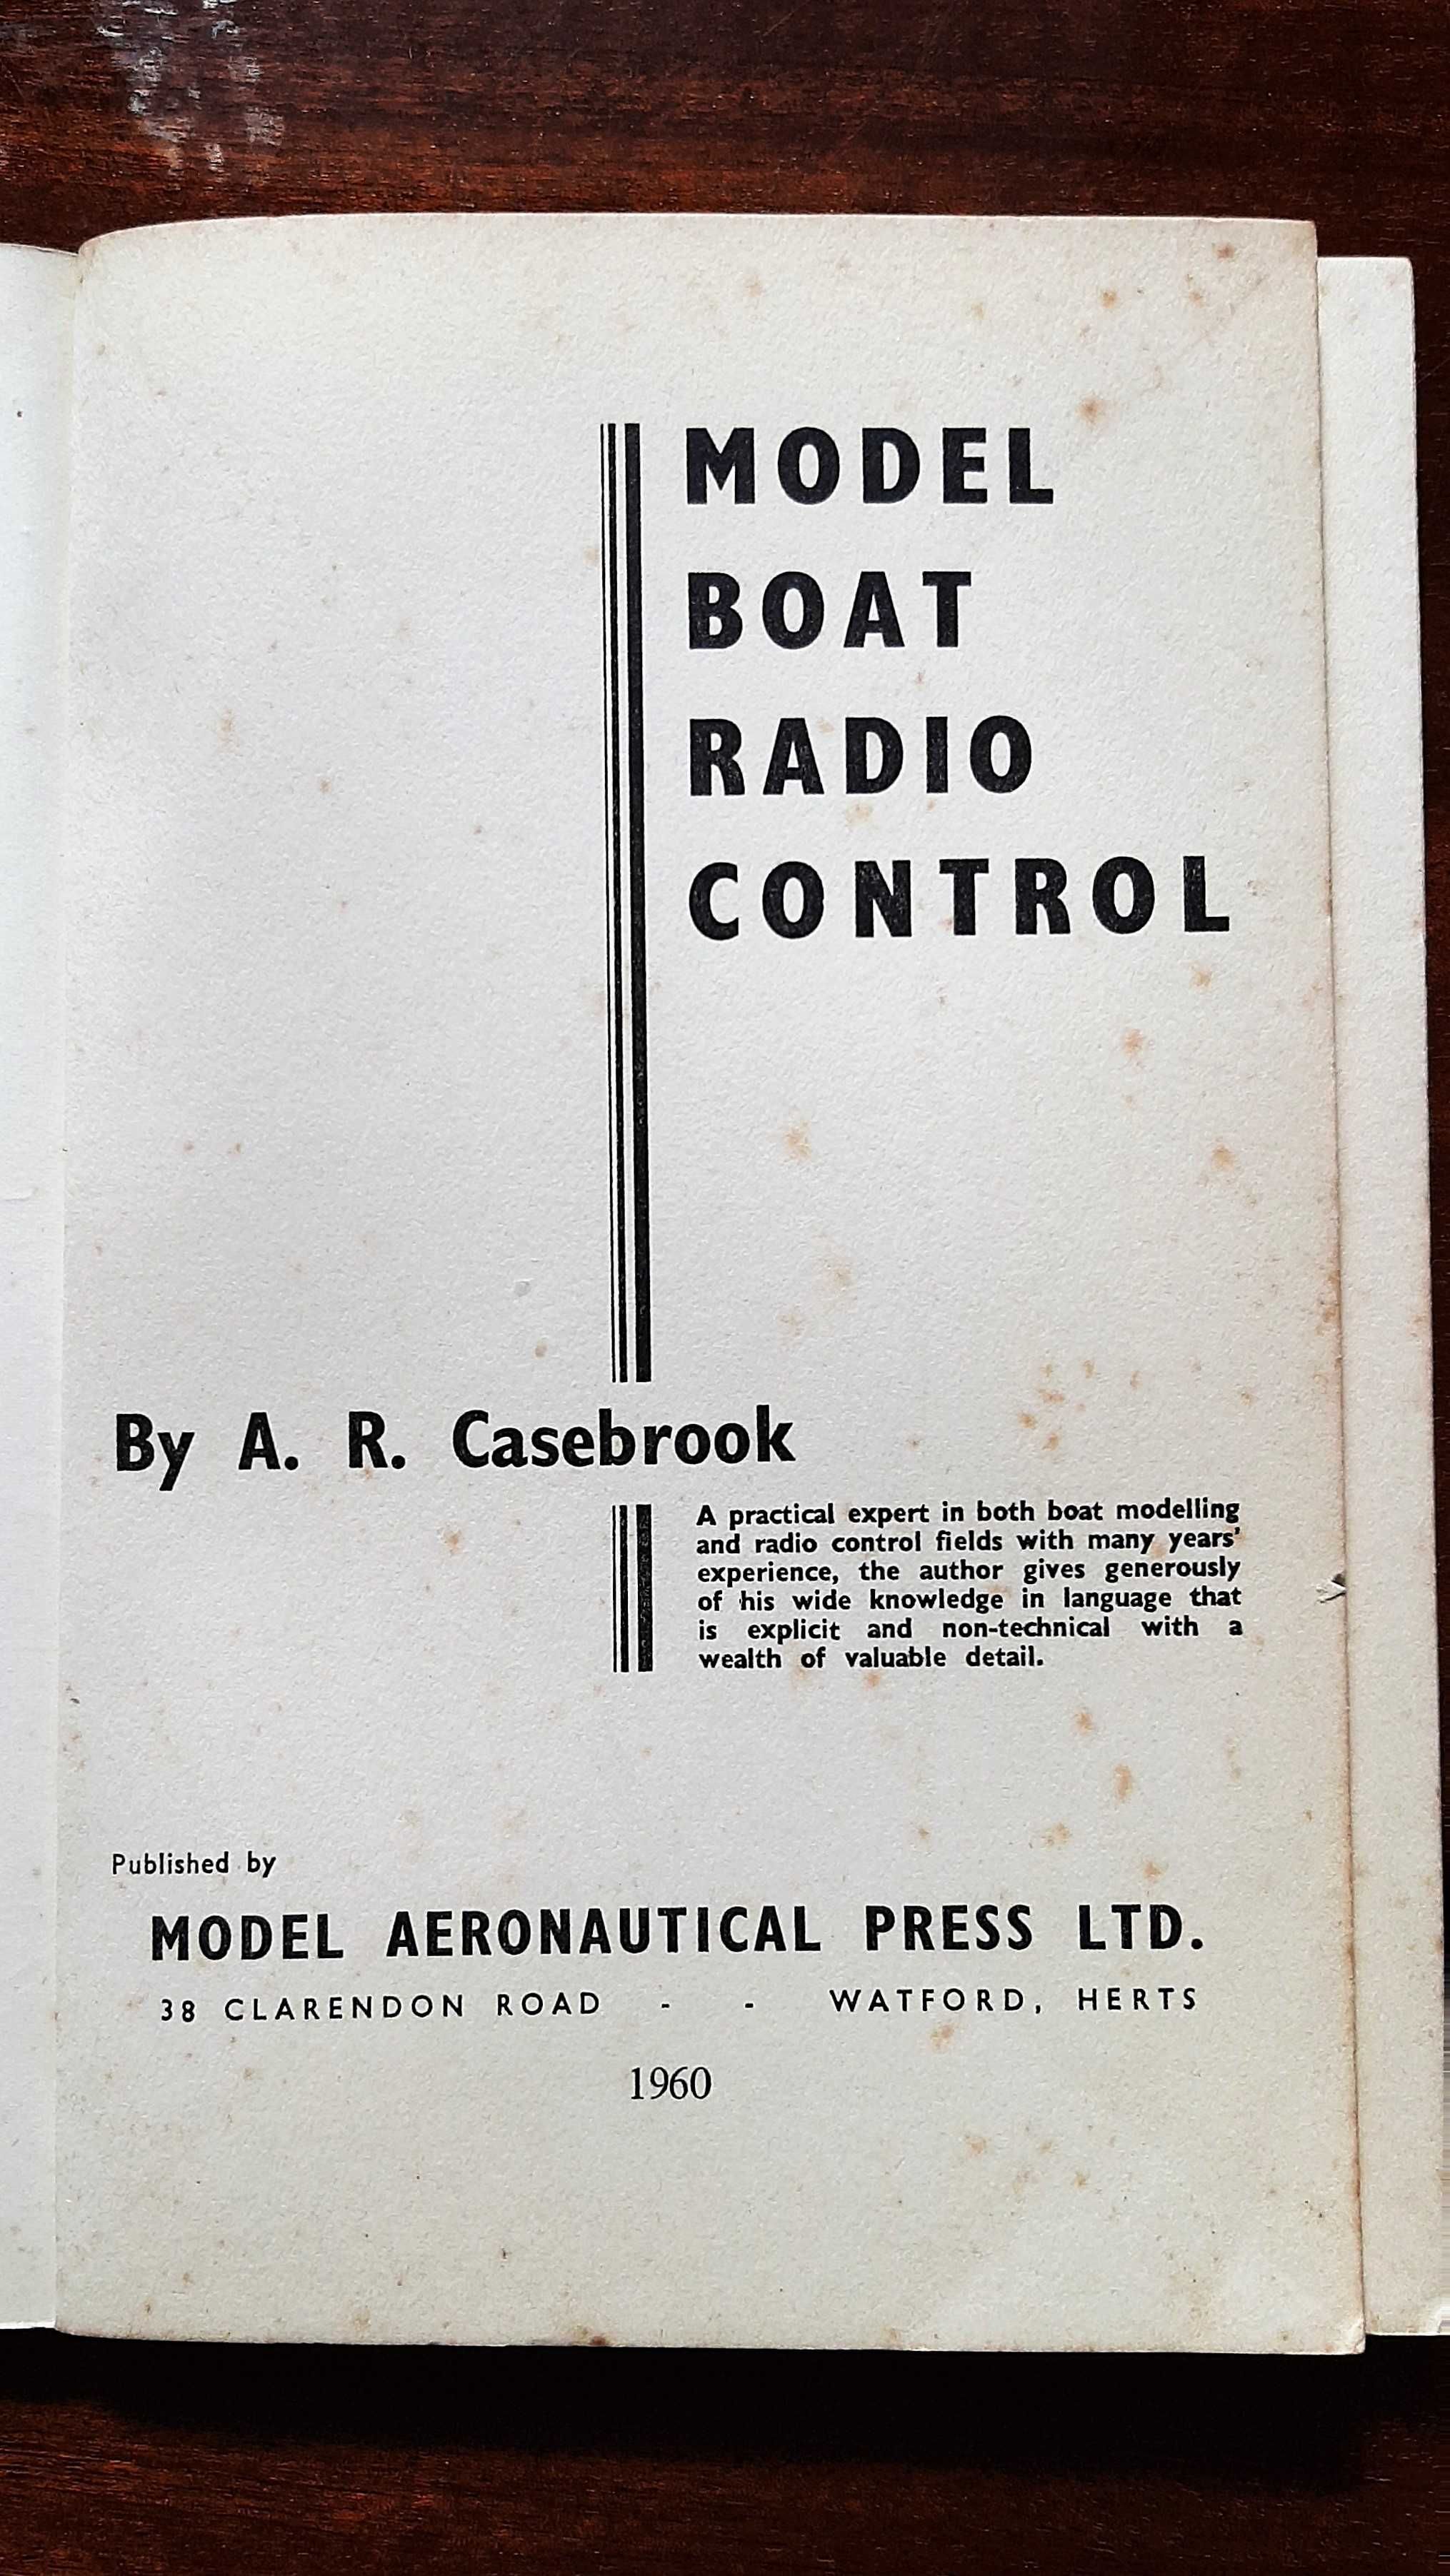 livro: "Model boat radio control"